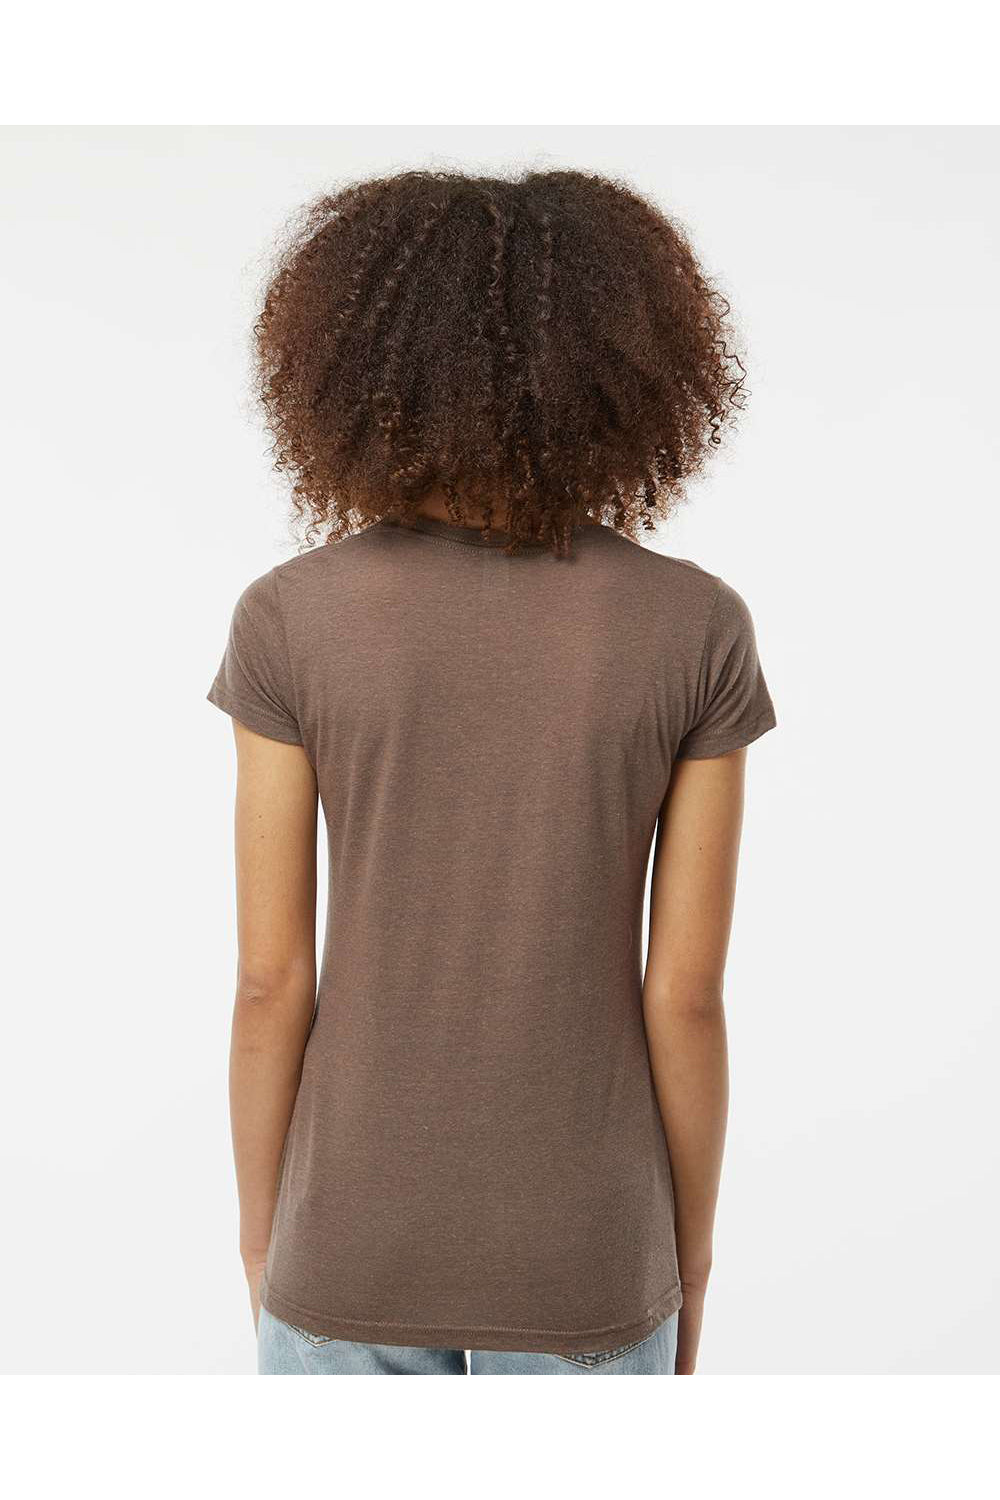 Tultex 253 Womens Short Sleeve Crewneck T-Shirt Mocha Brown Model Back